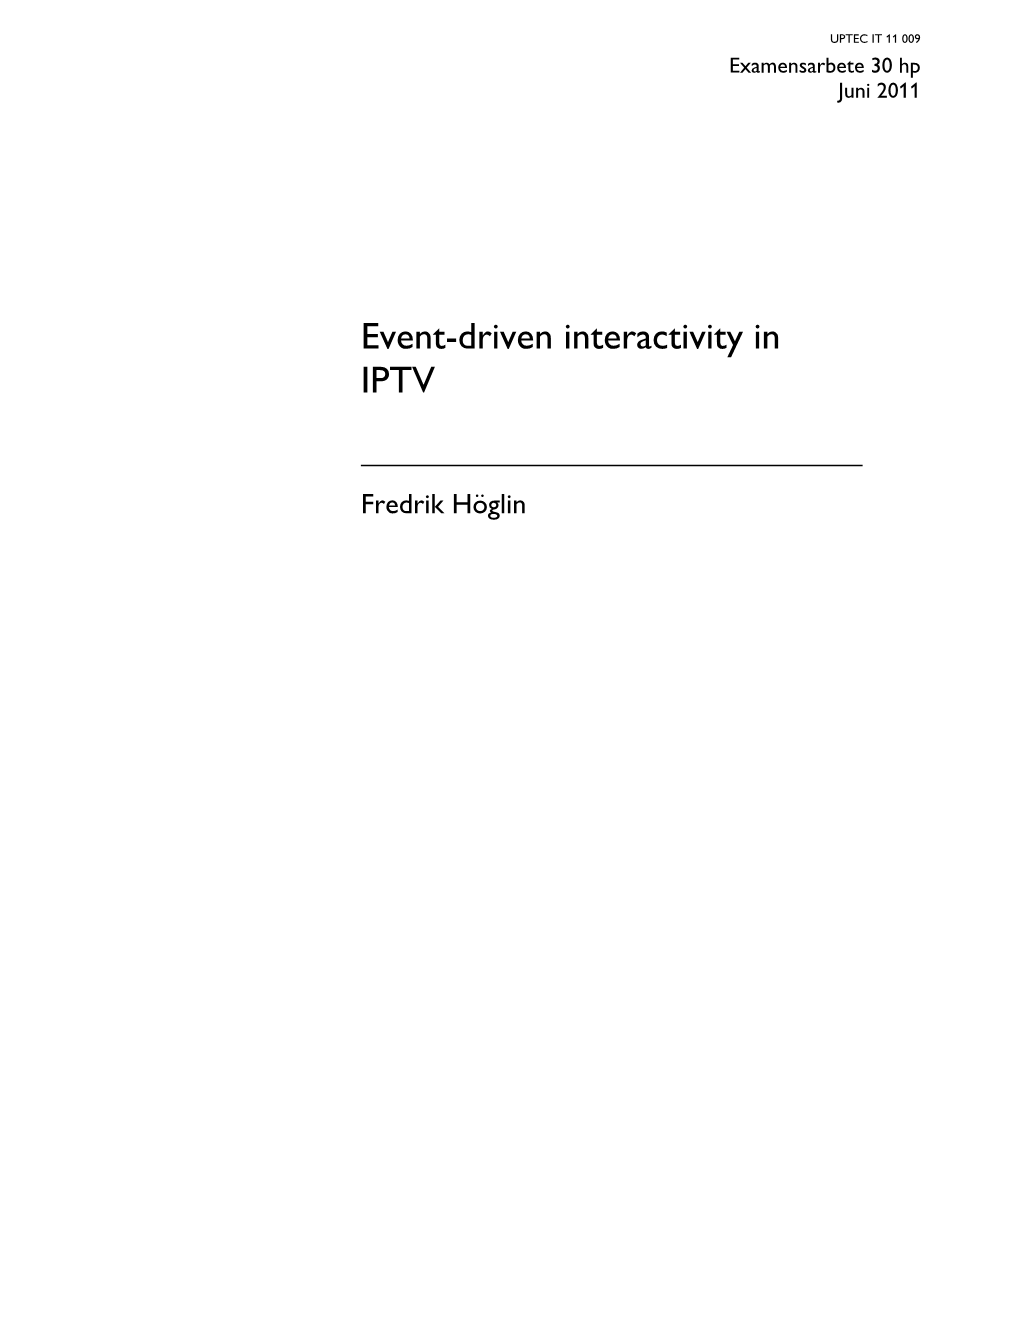 Event-Driven Interactivity in IPTV